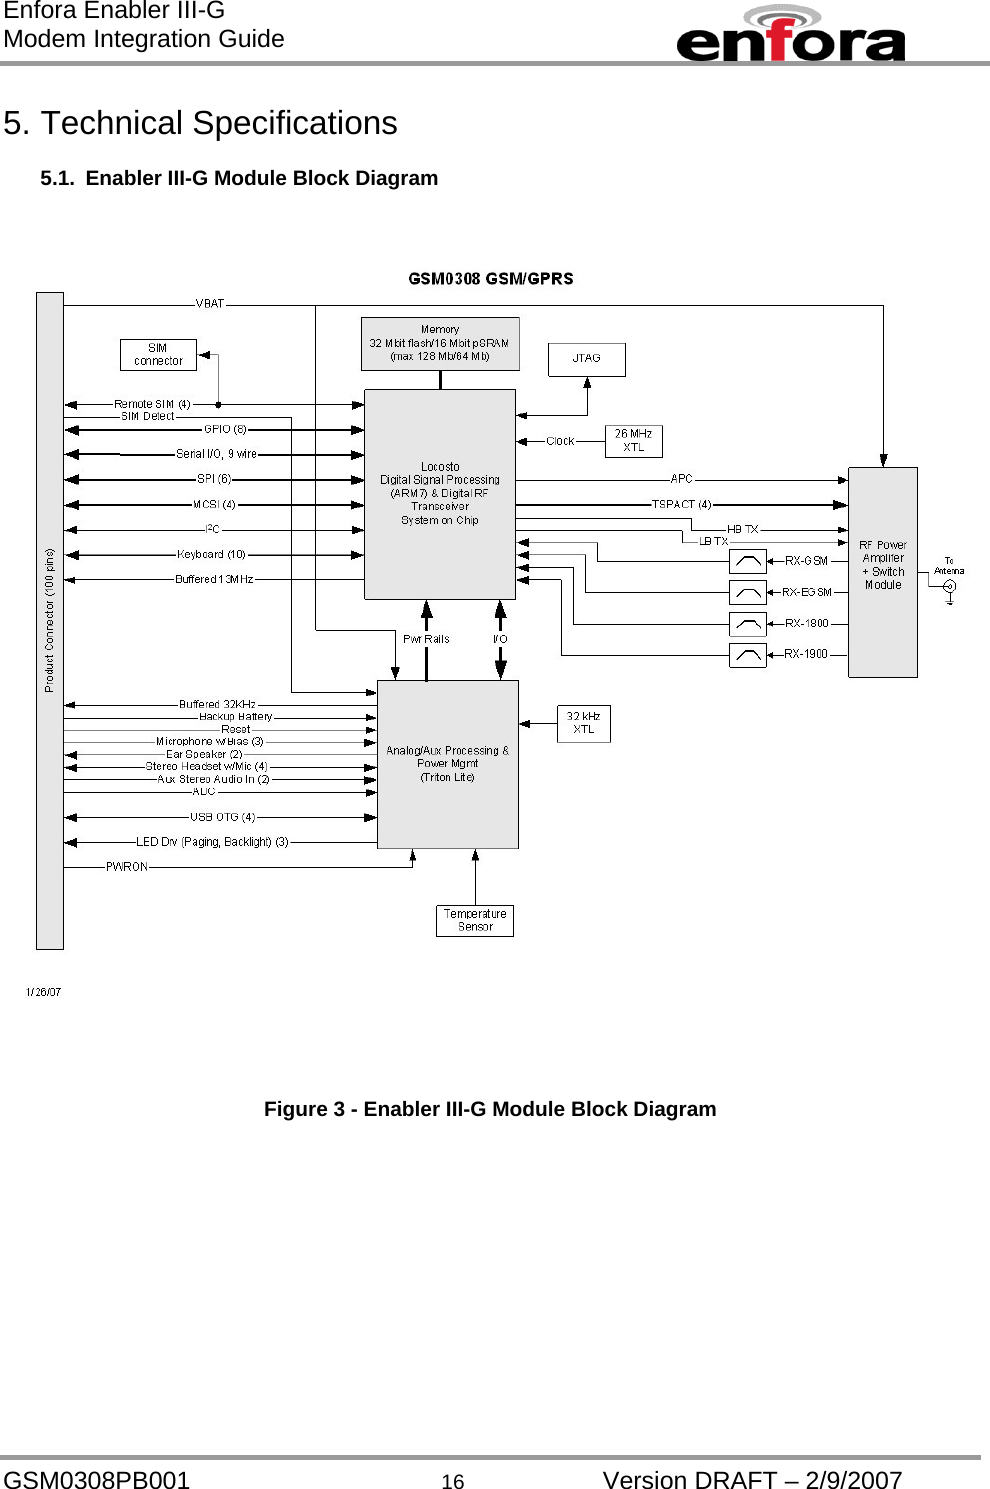 Enfora Enabler III-G Modem Integration Guide  5. Technical Specifications  5.1.  Enabler III-G Module Block Diagram        Figure 3 - Enabler III-G Module Block Diagram GSM0308PB001  16  Version DRAFT – 2/9/2007 